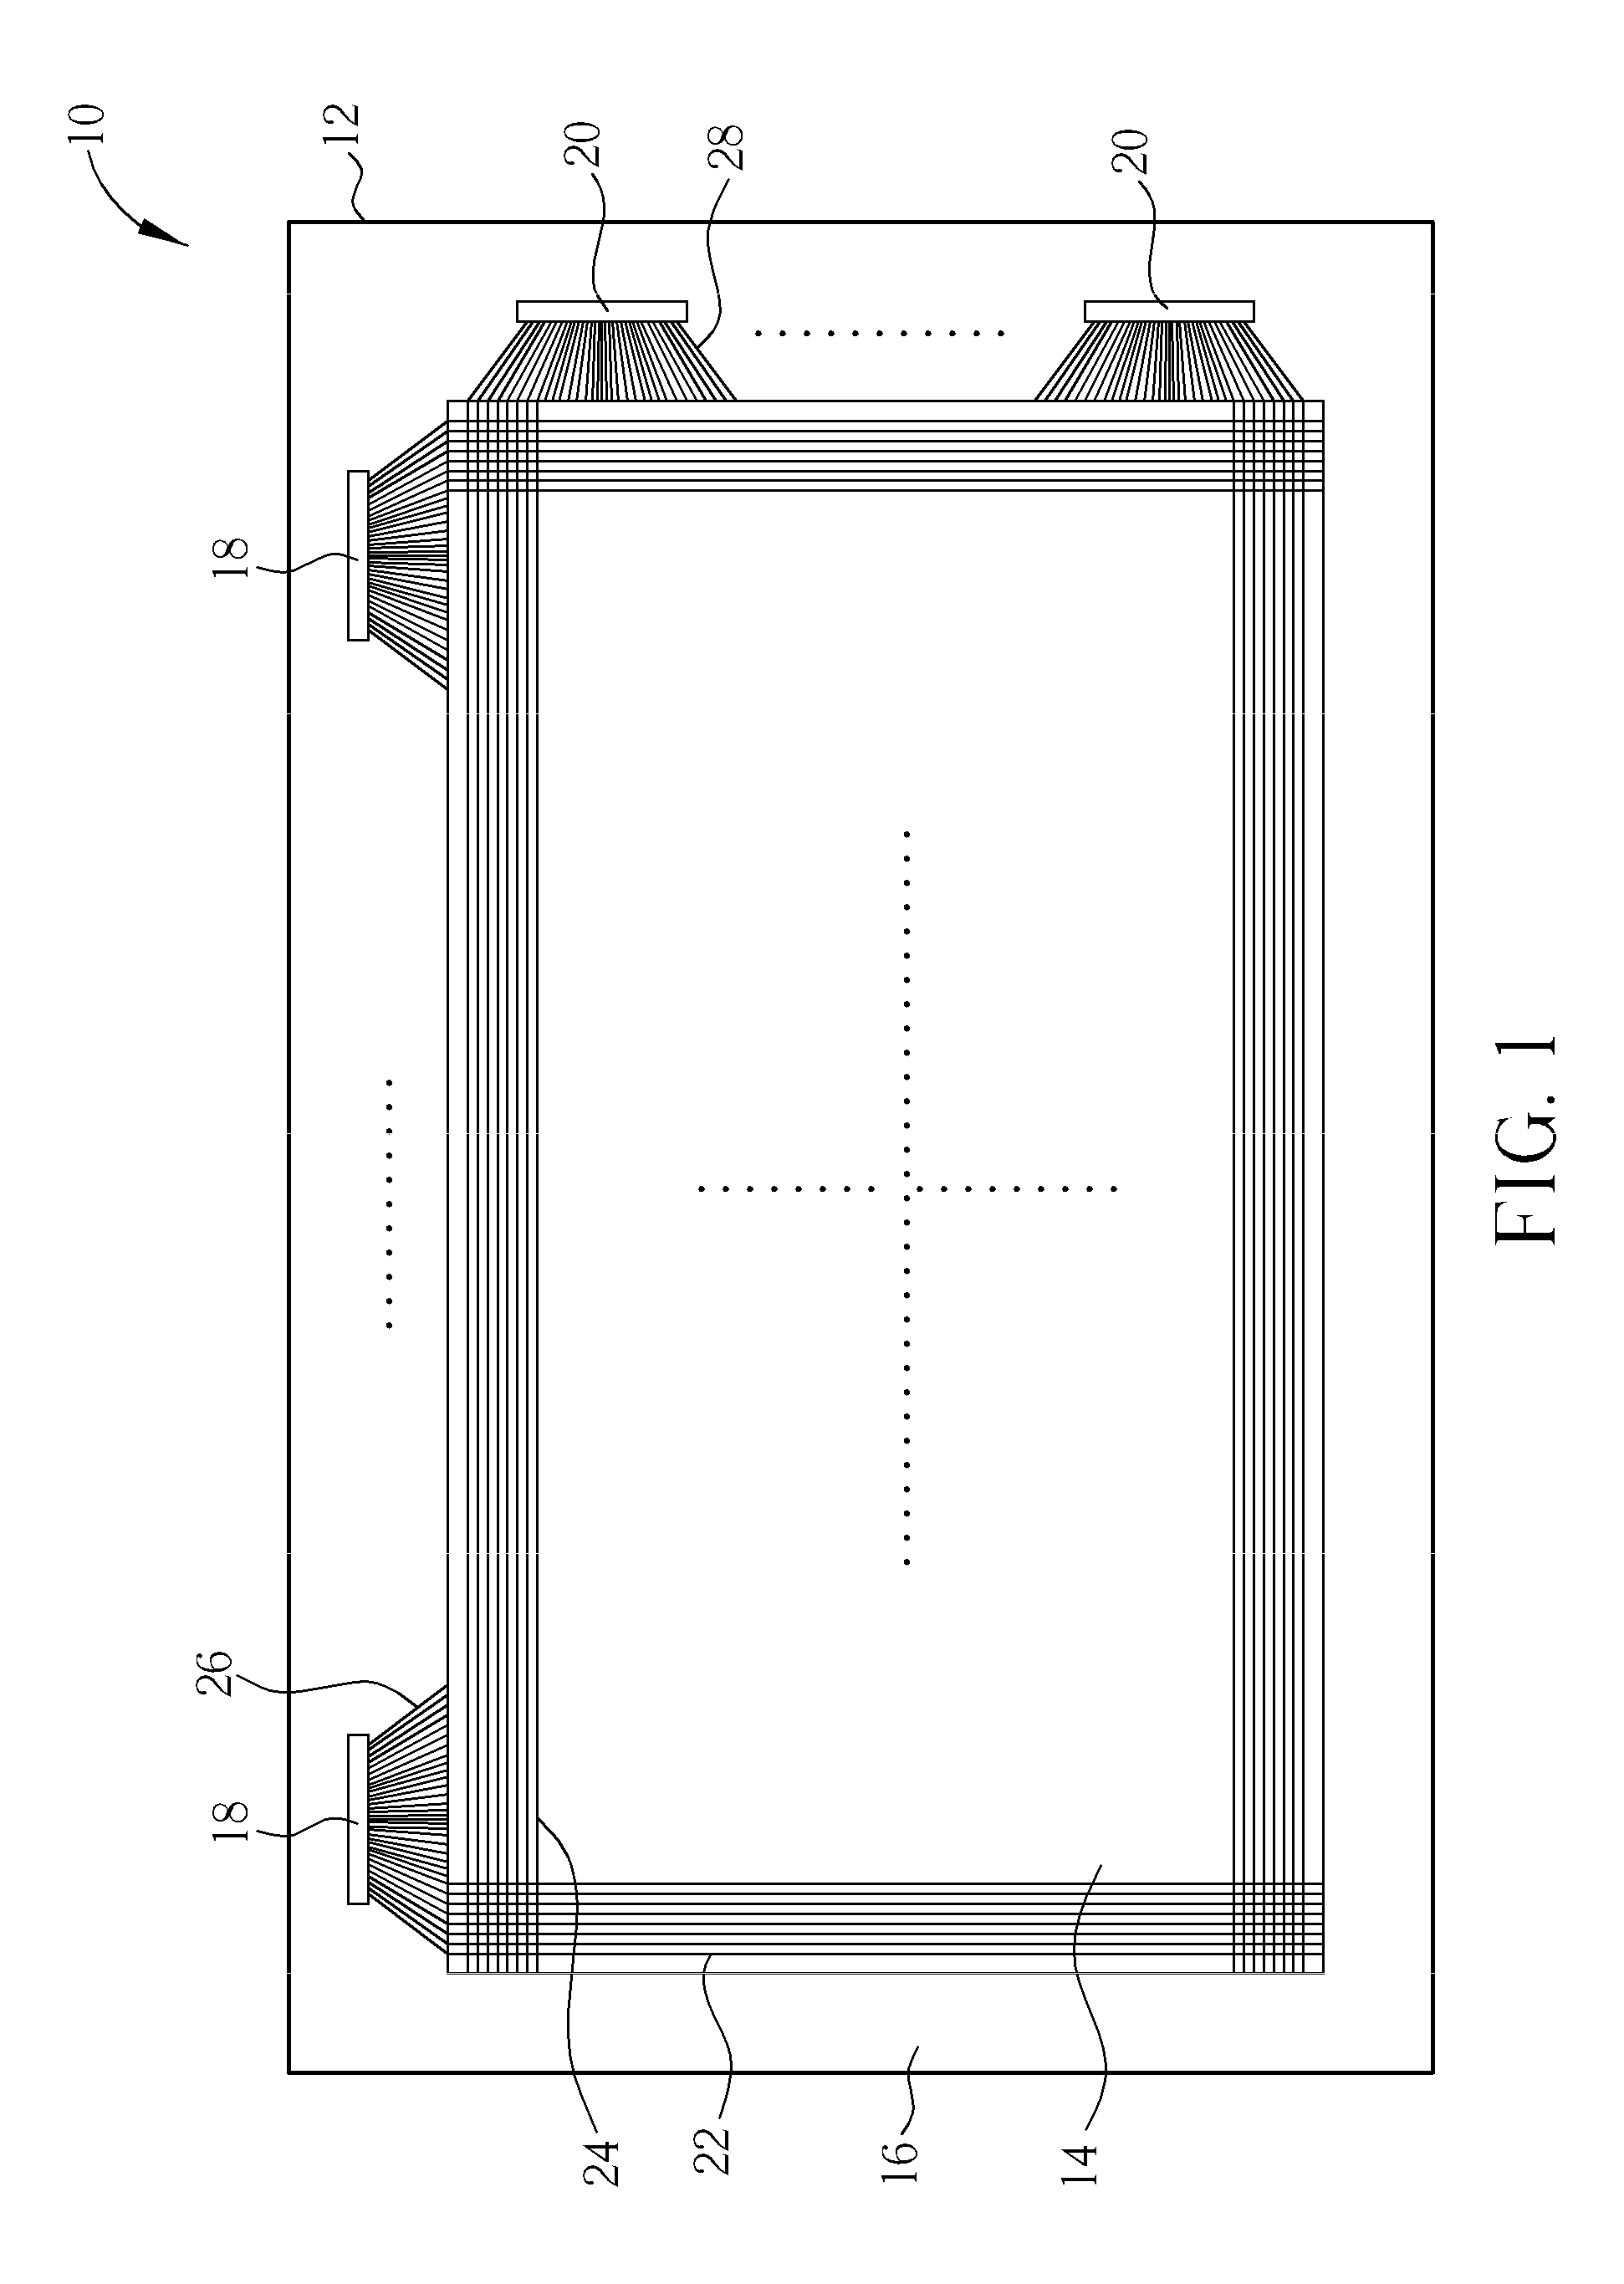 Flat display panel